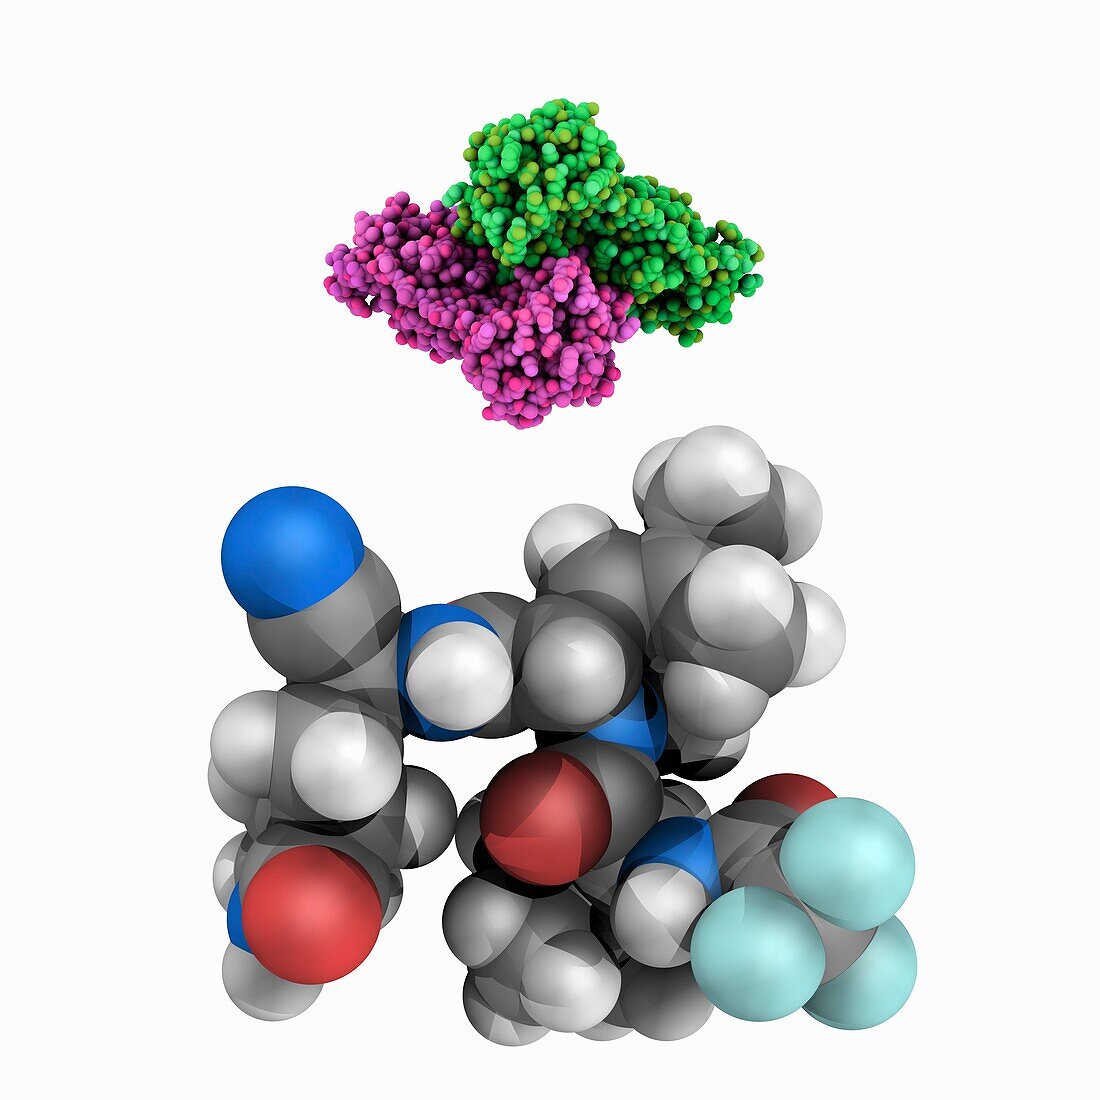 SARS-CoV-2 protease inhibitor PF-07321332, molecular model